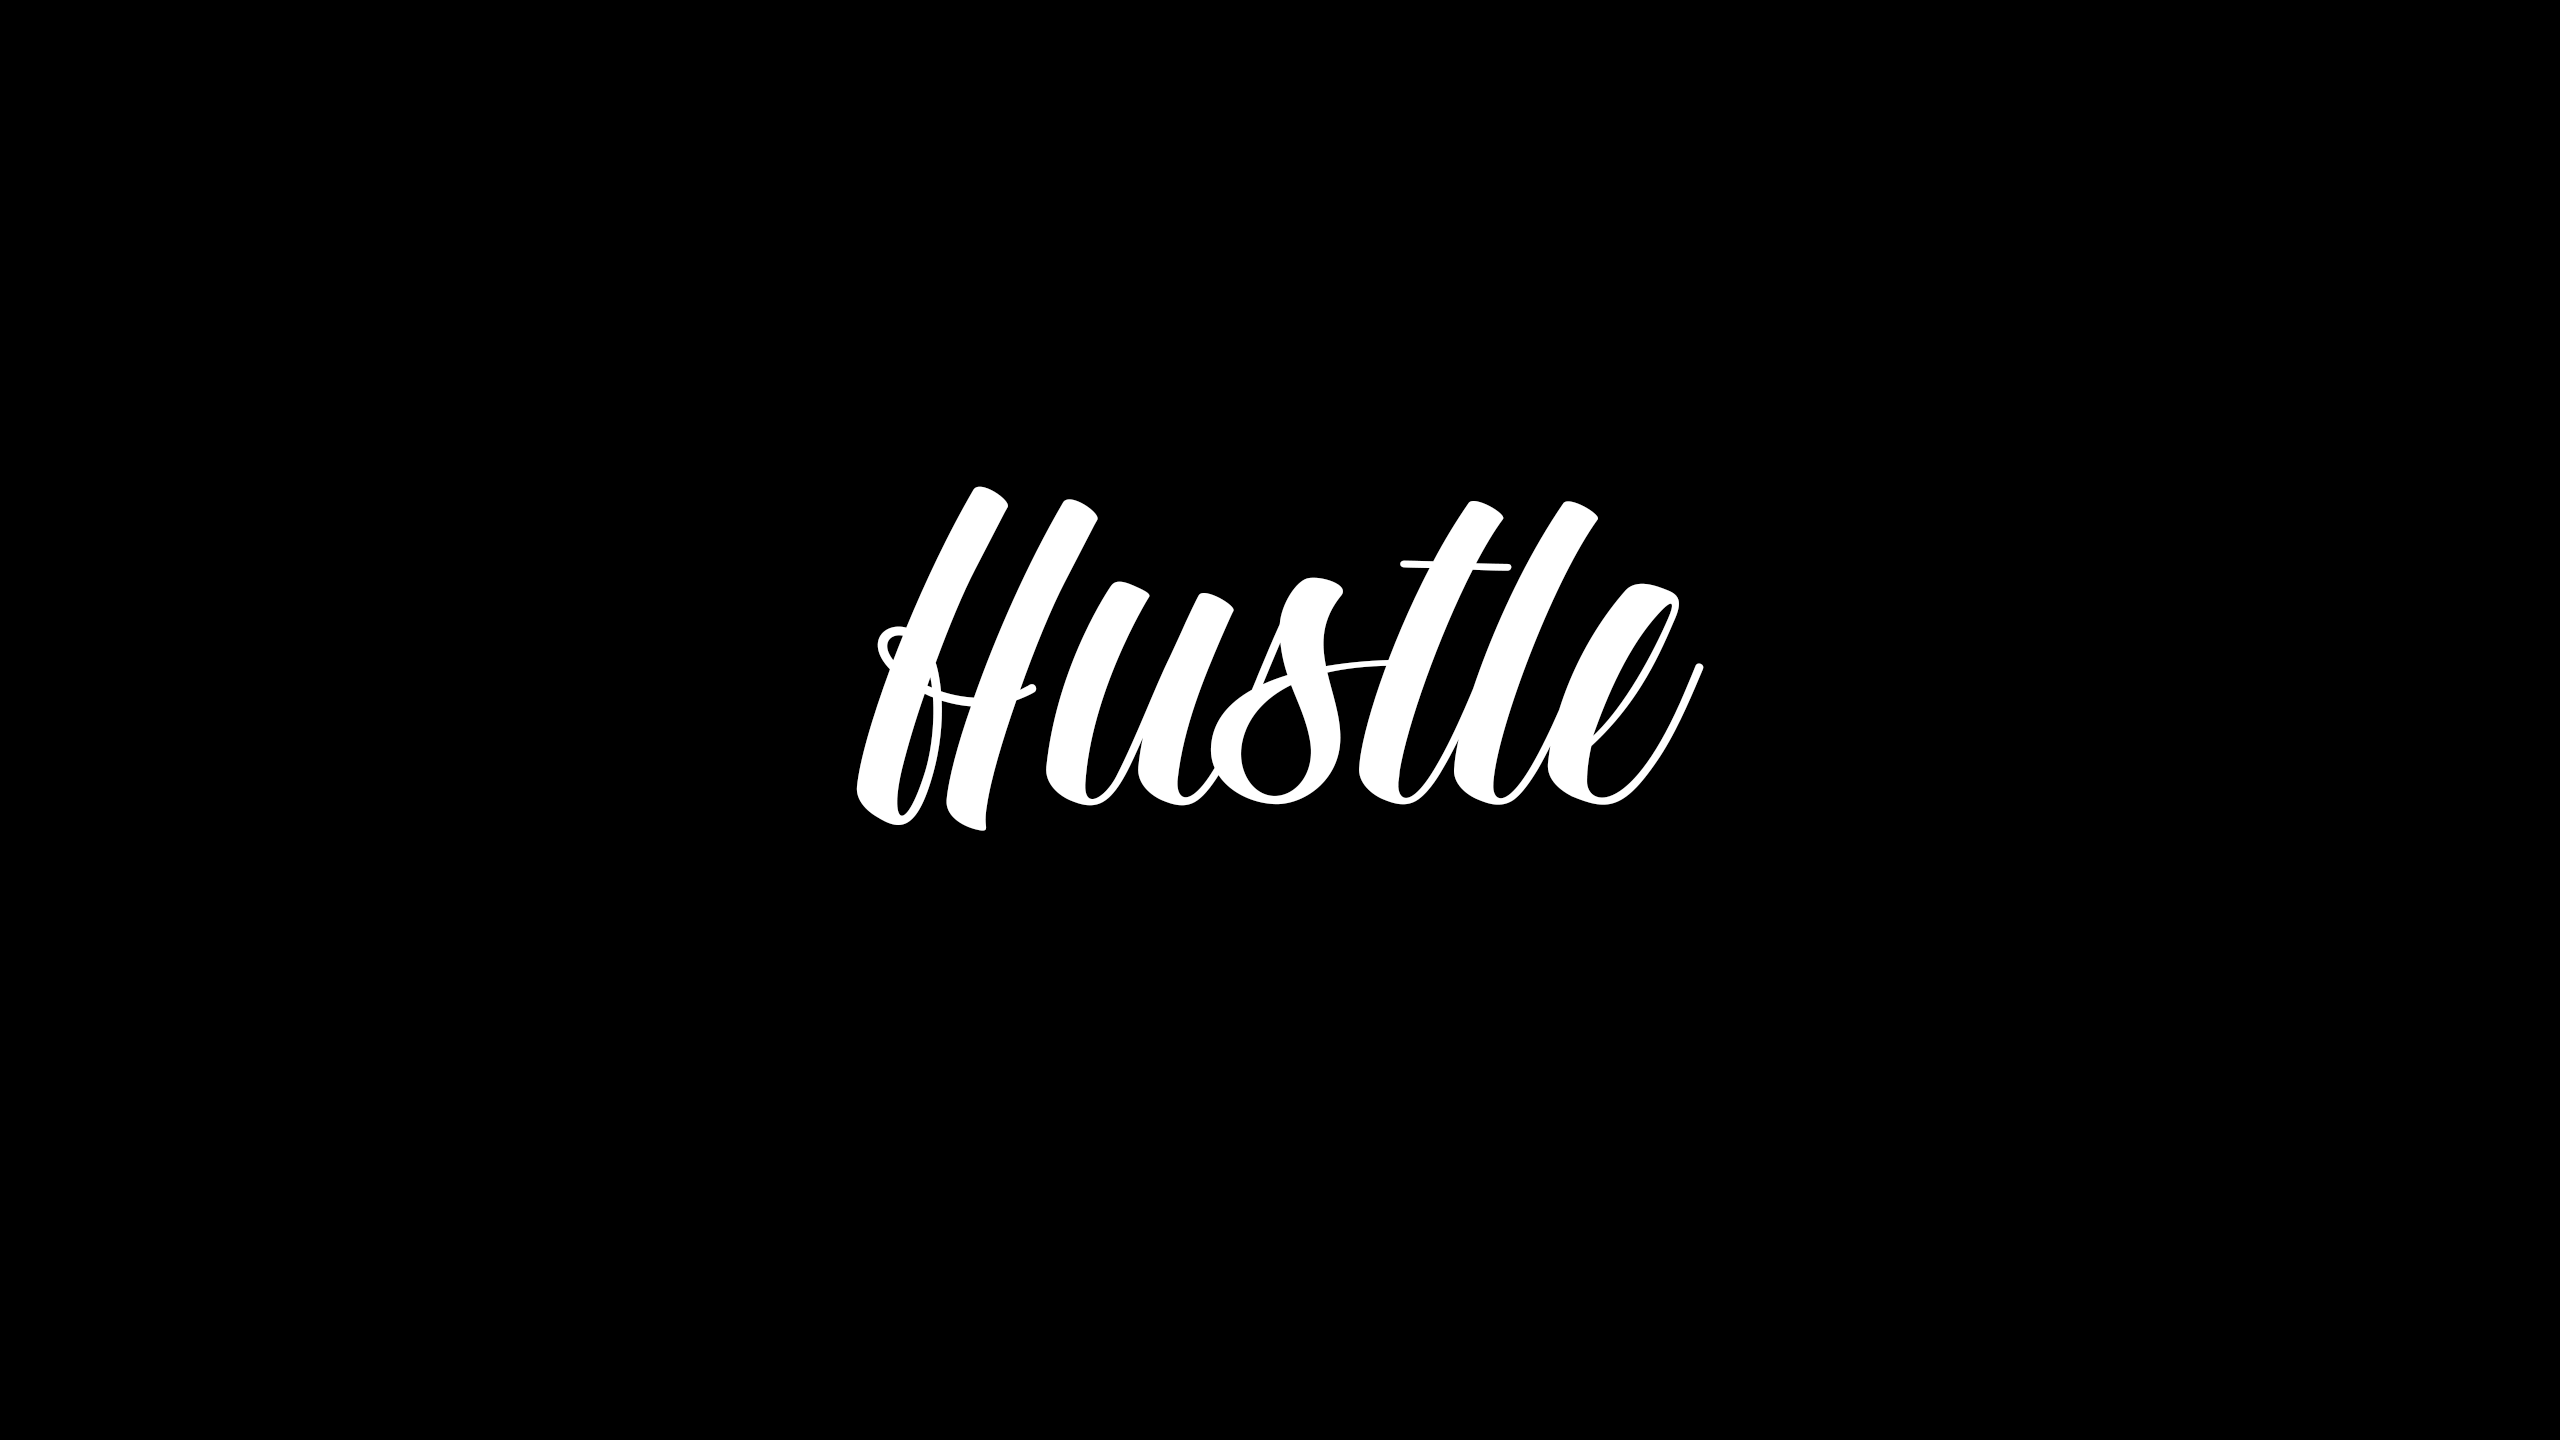 Hustle Wallpaper Wallpaperarc